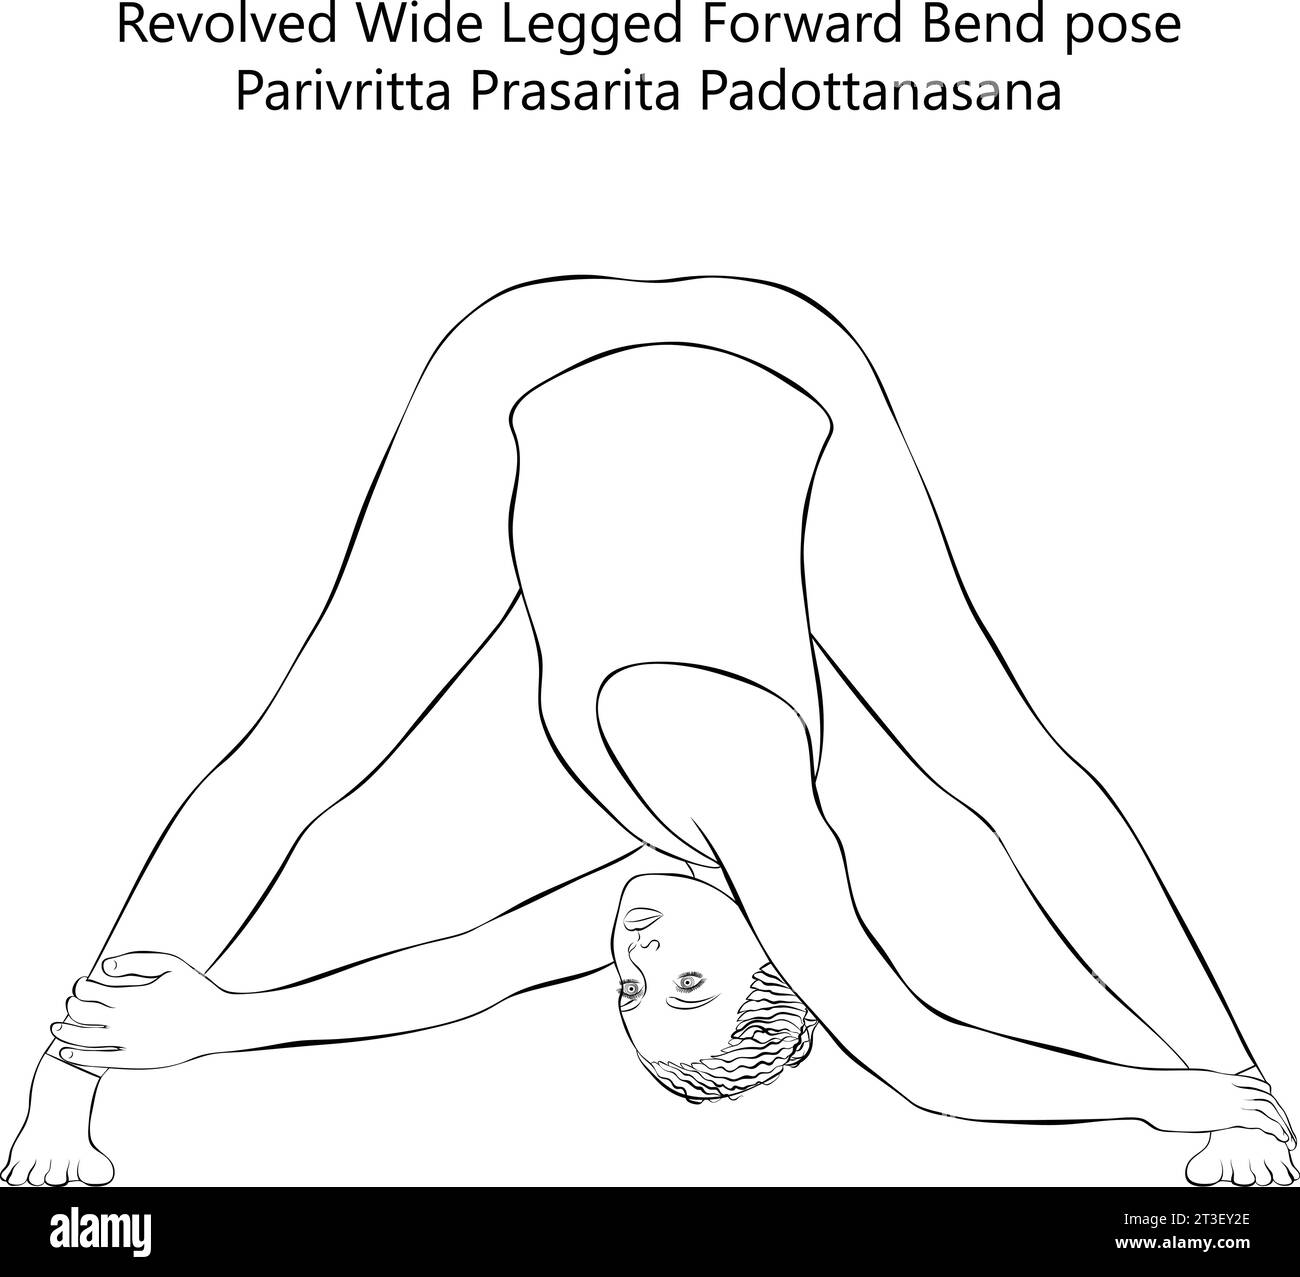 Sketch of young woman doing yoga Parivritta Prasarita Padottanasana. Revolved Wide Legged Forward Bend pose. Isolated vector illustration. Stock Vector